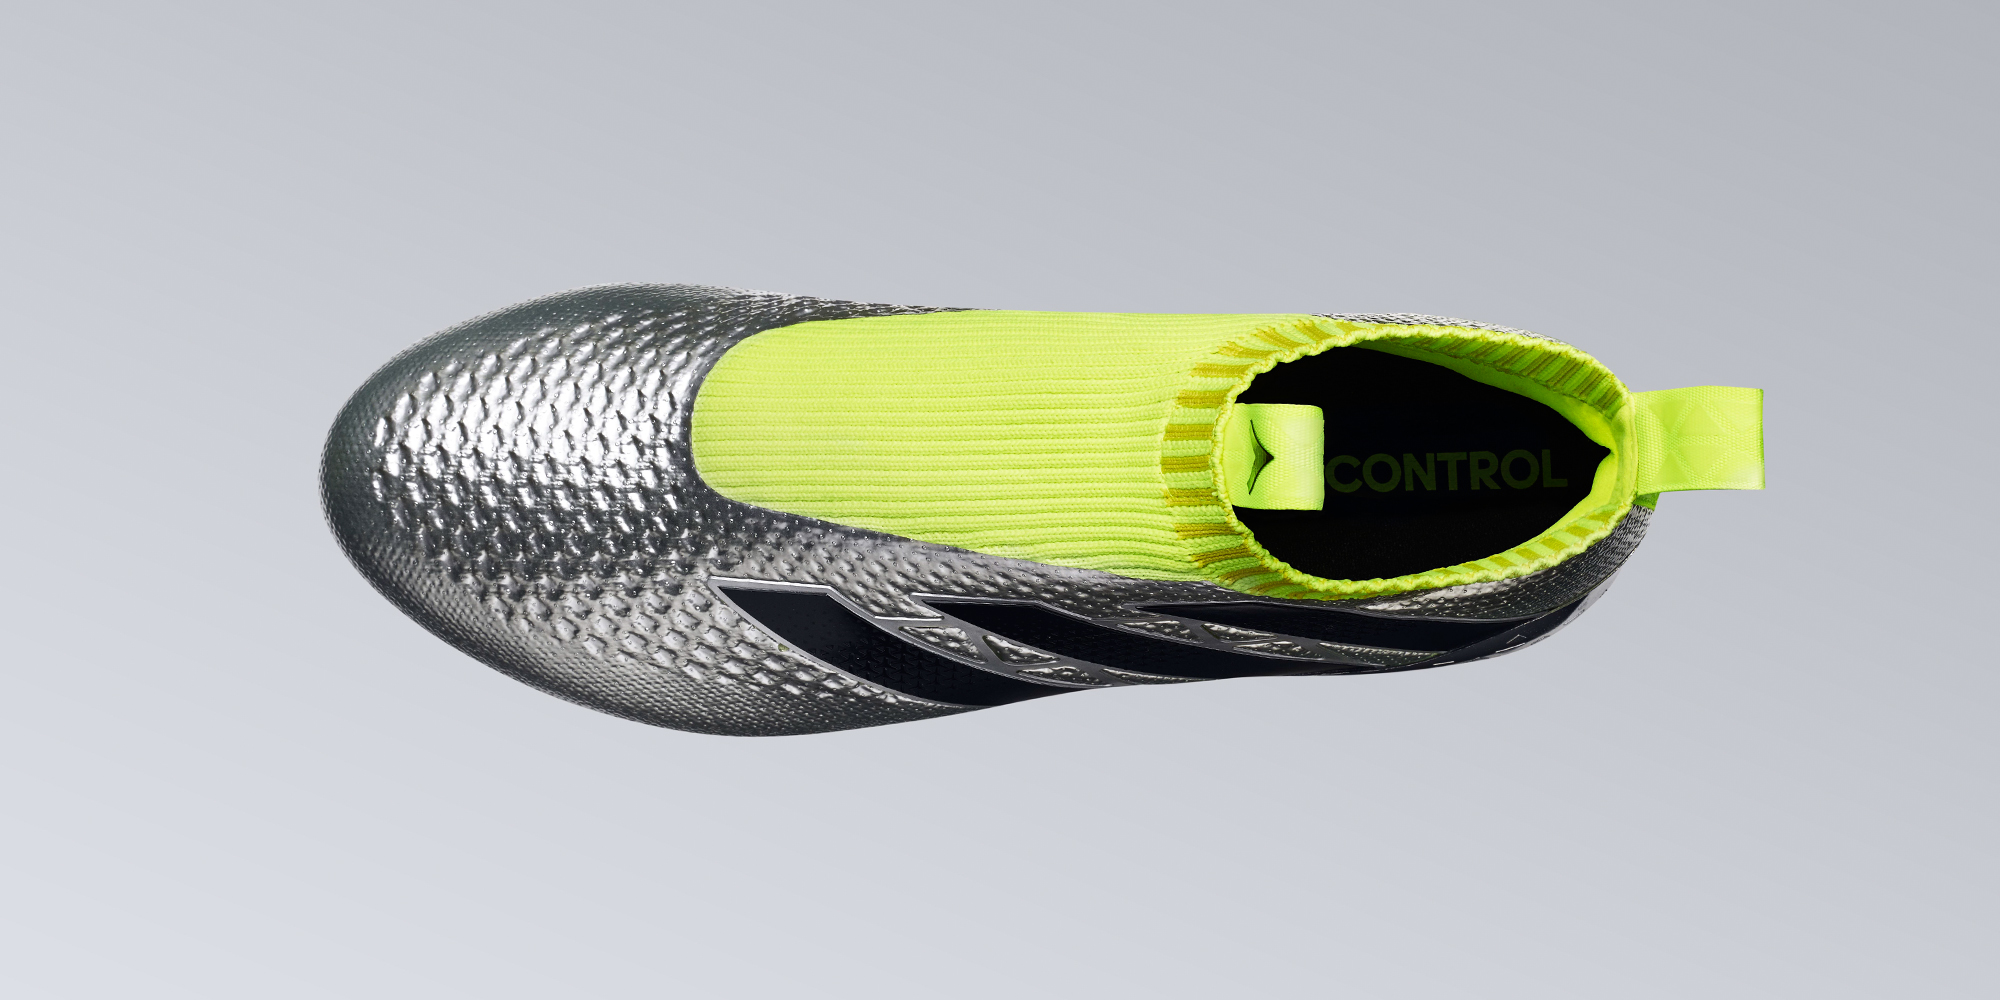 chaussure chromée ACE16+ PURECONTROL euro 2016 adidas football